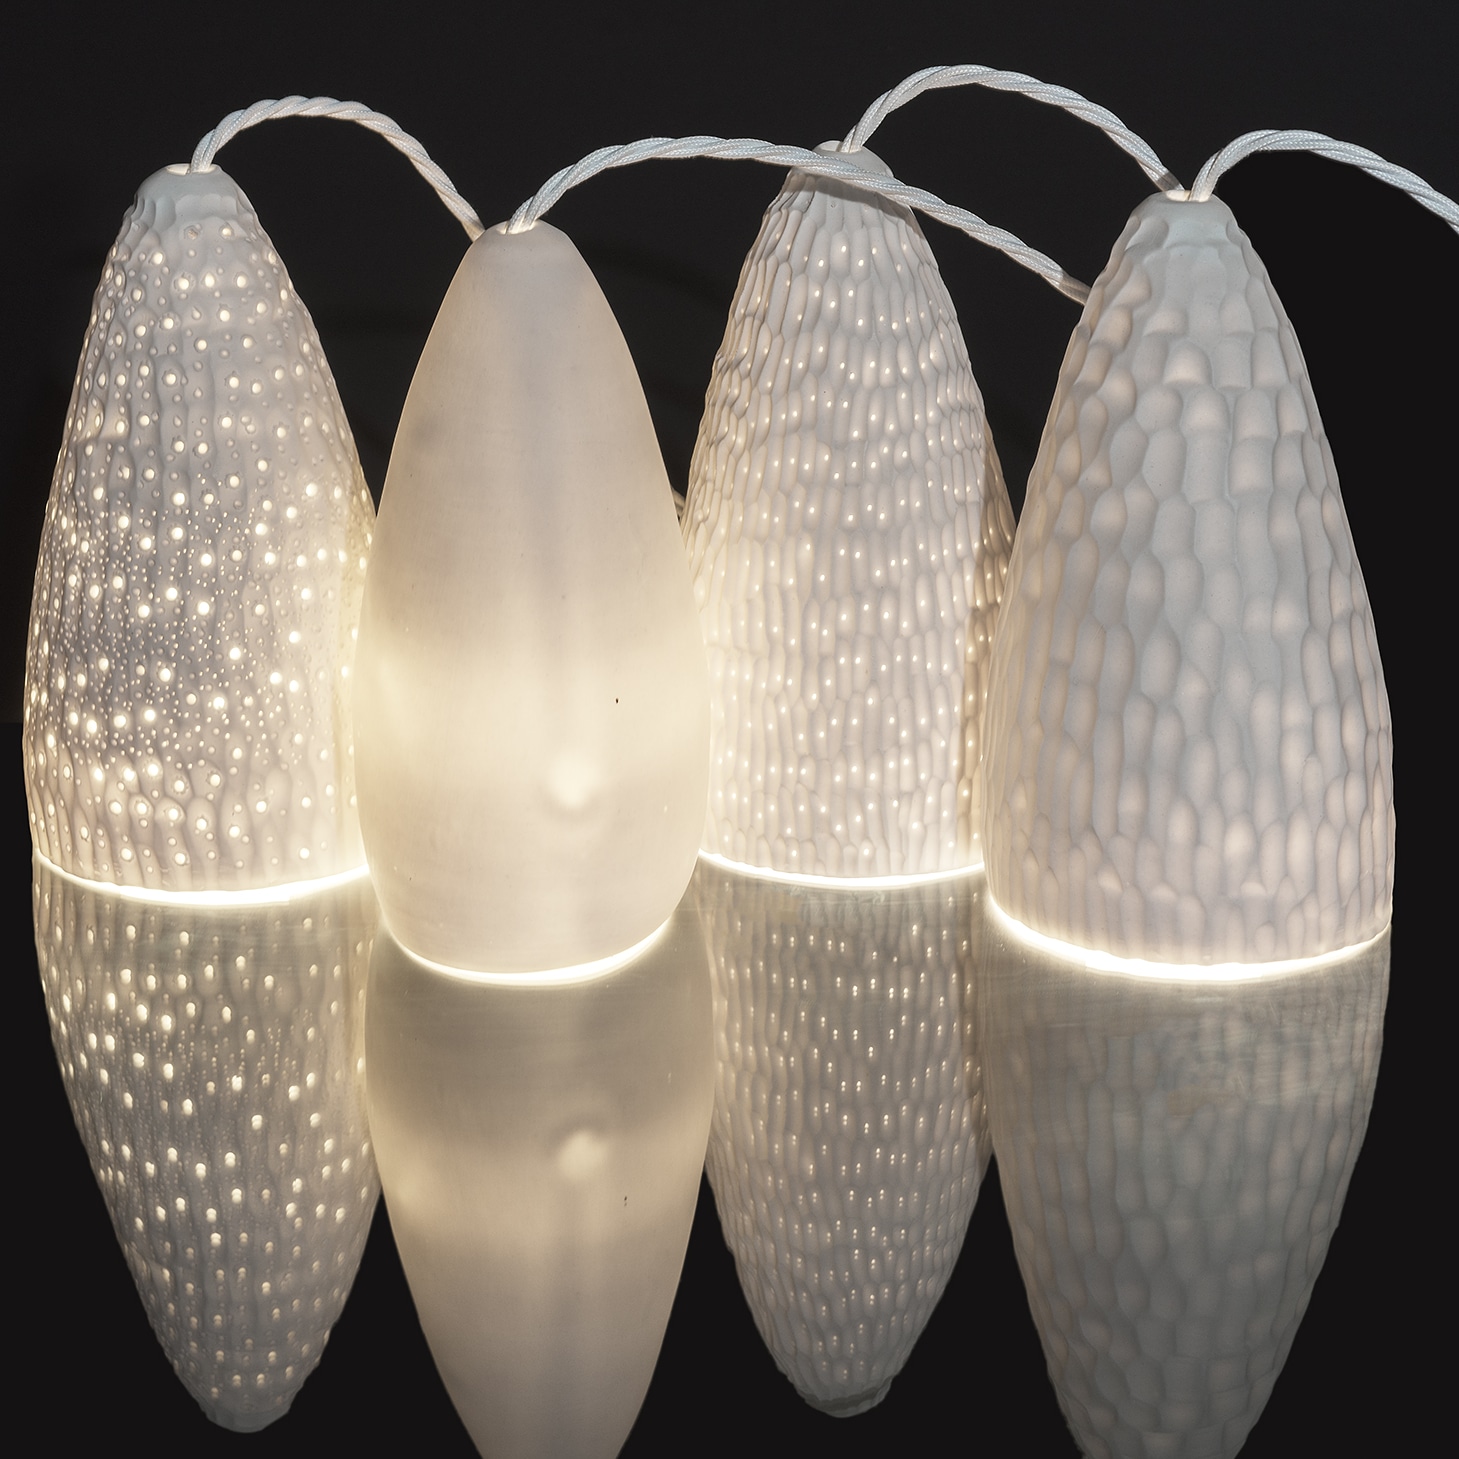 Porcelain slip cast and carved Pendant LED light by Jo Victoria